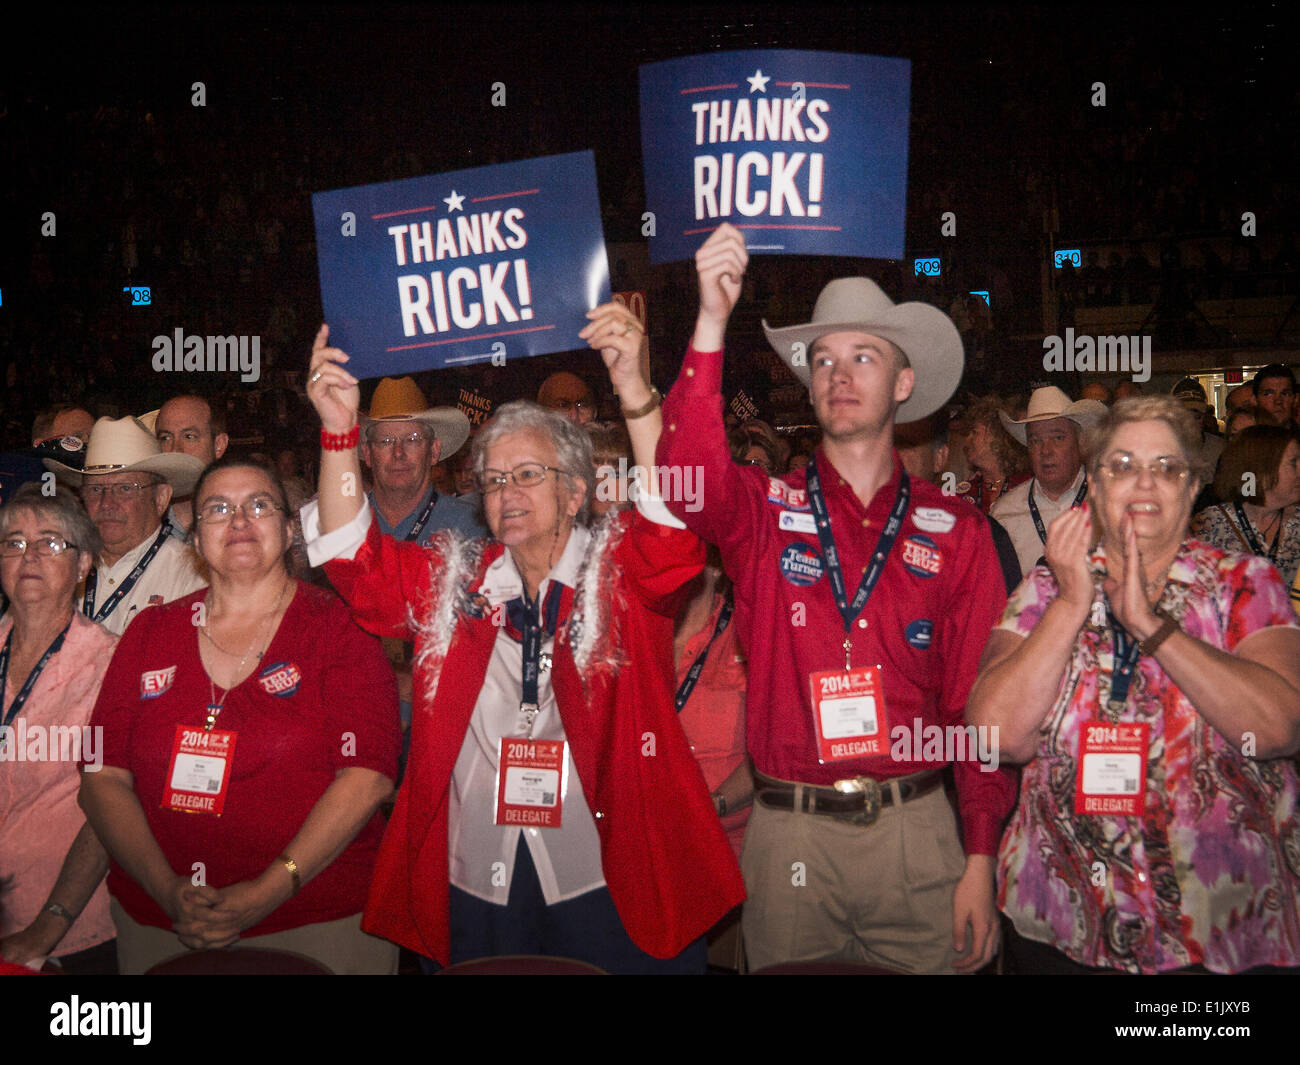 Ola roja republicana fotografías e imágenes de alta resolución - Alamy